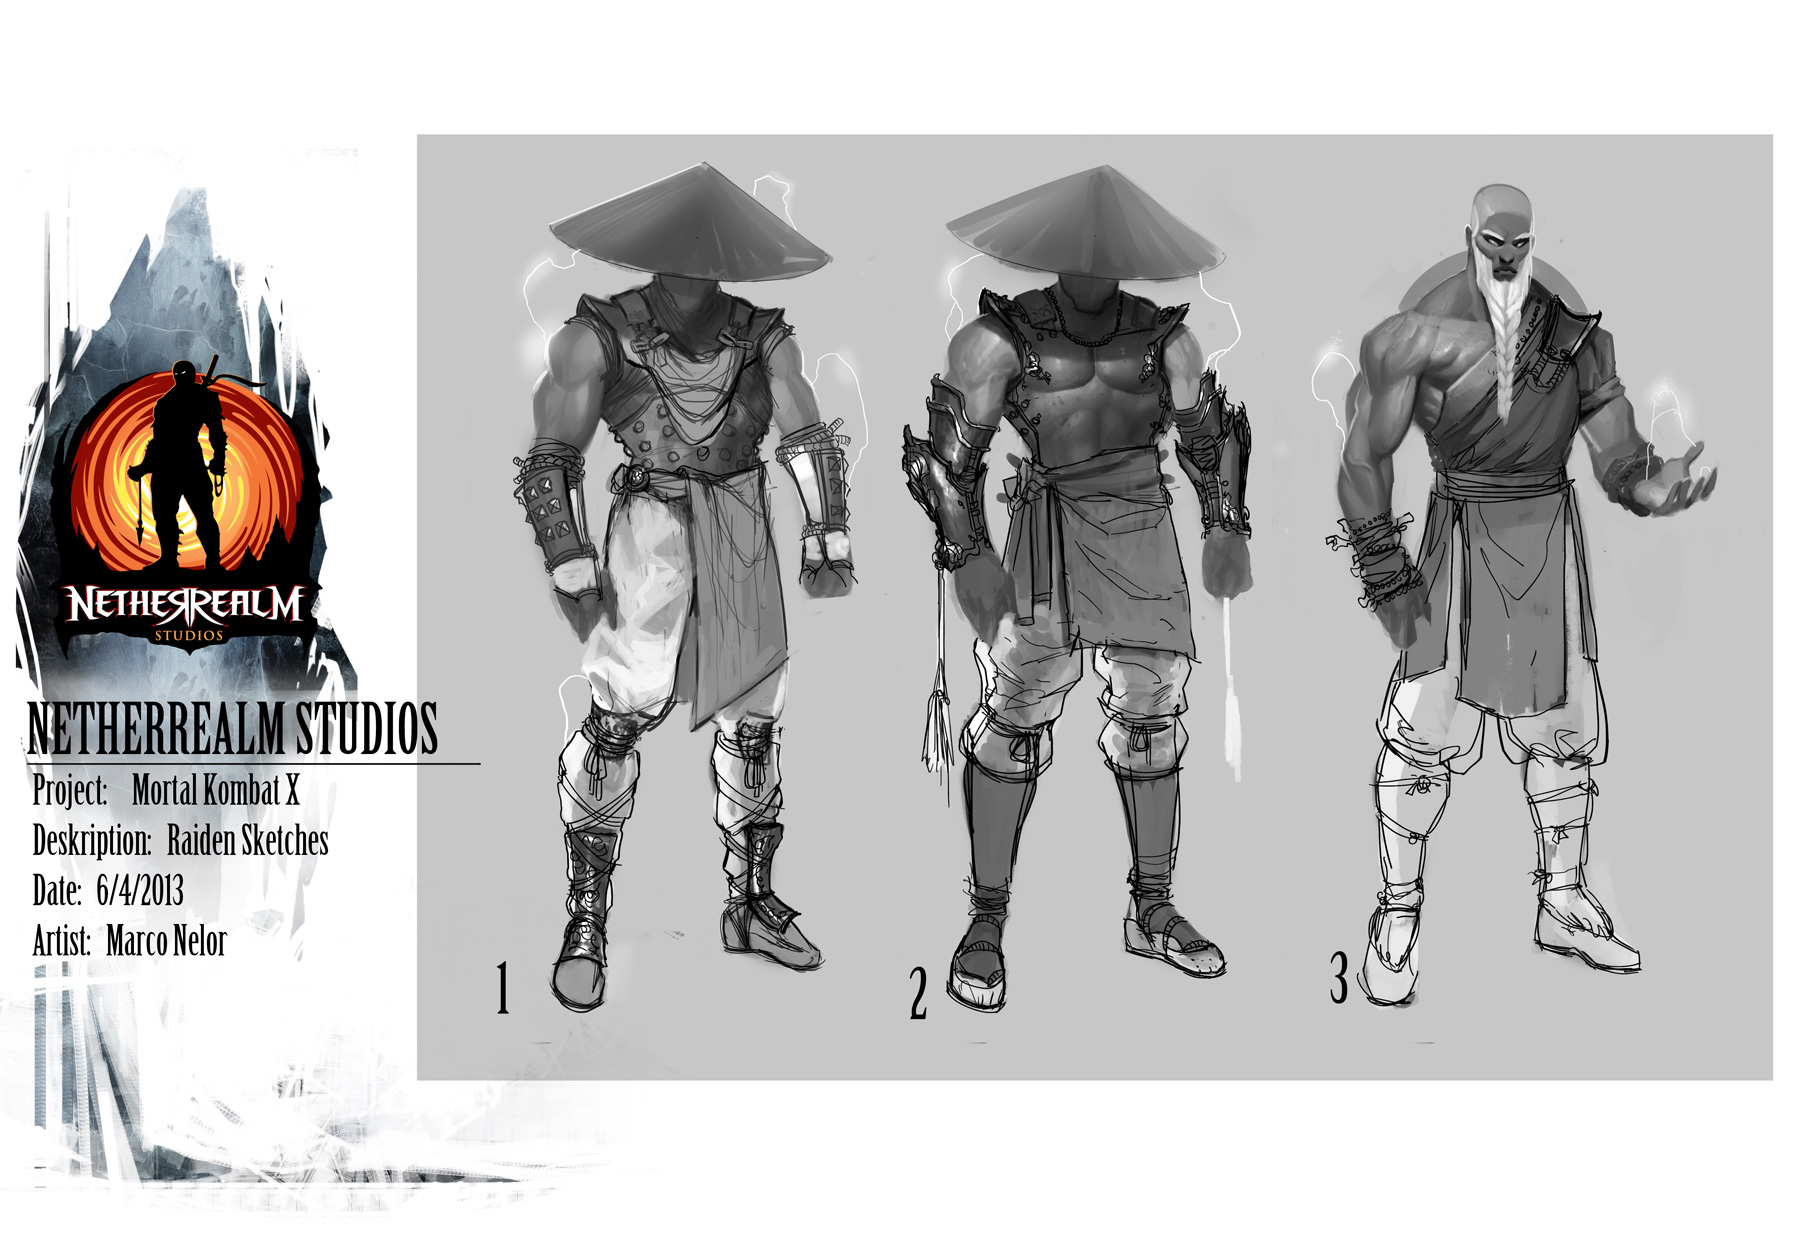 Exclusive Mortal Kombat X Concept Art By Marco Nelor Concept Art World